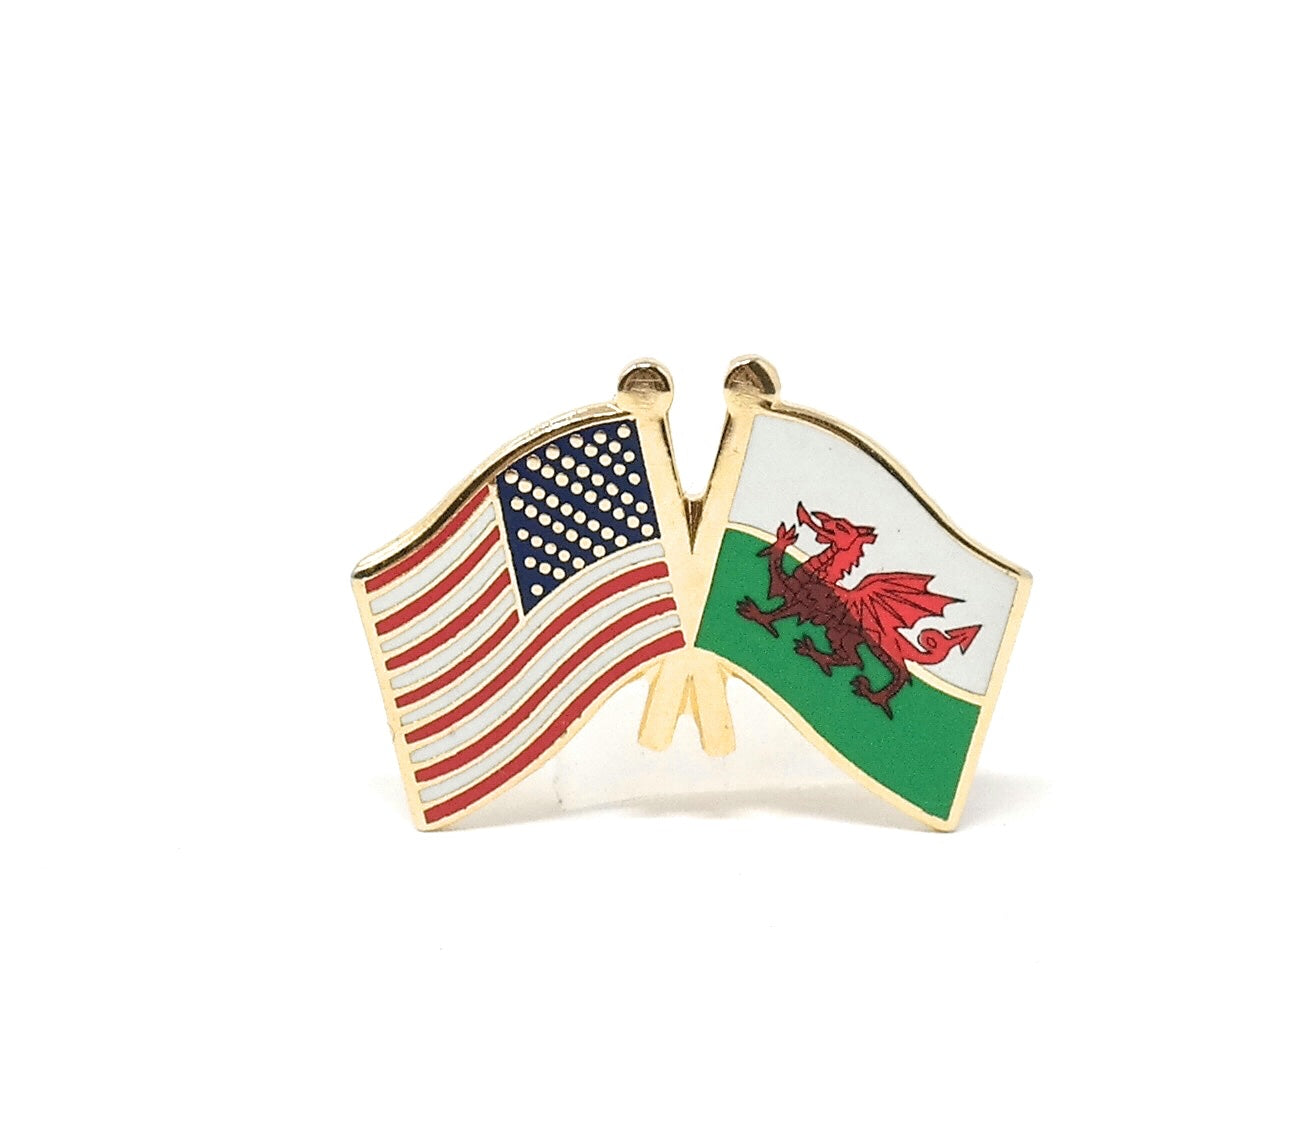 Wales & USA Friendship Flags Lapel Pin